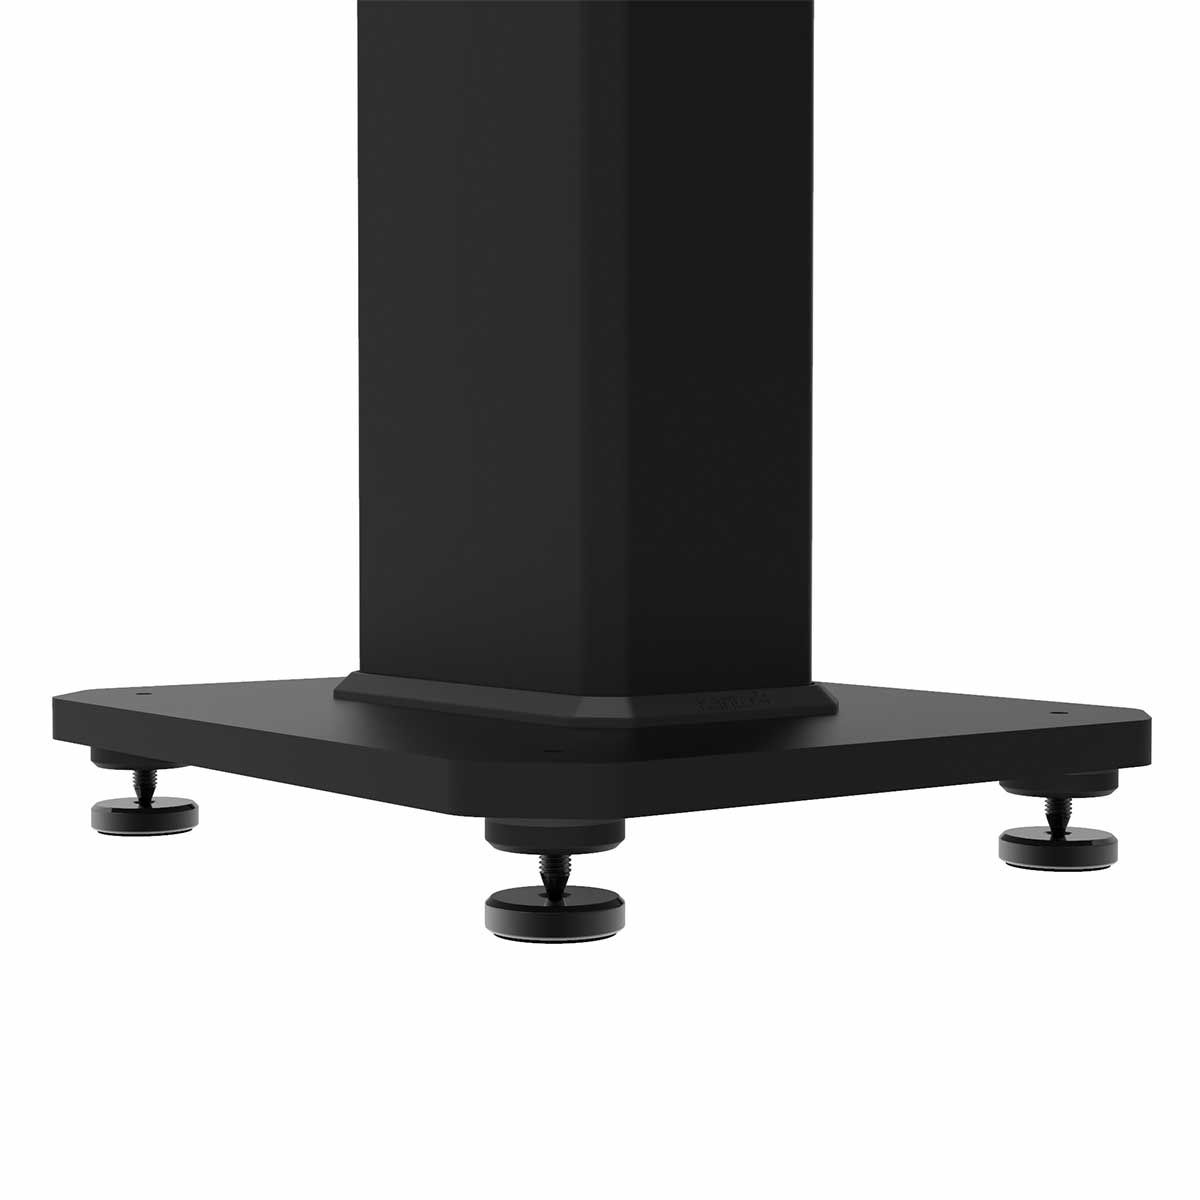 Kanto SX Speaker Stands, Black, bottom plate and isolation feet